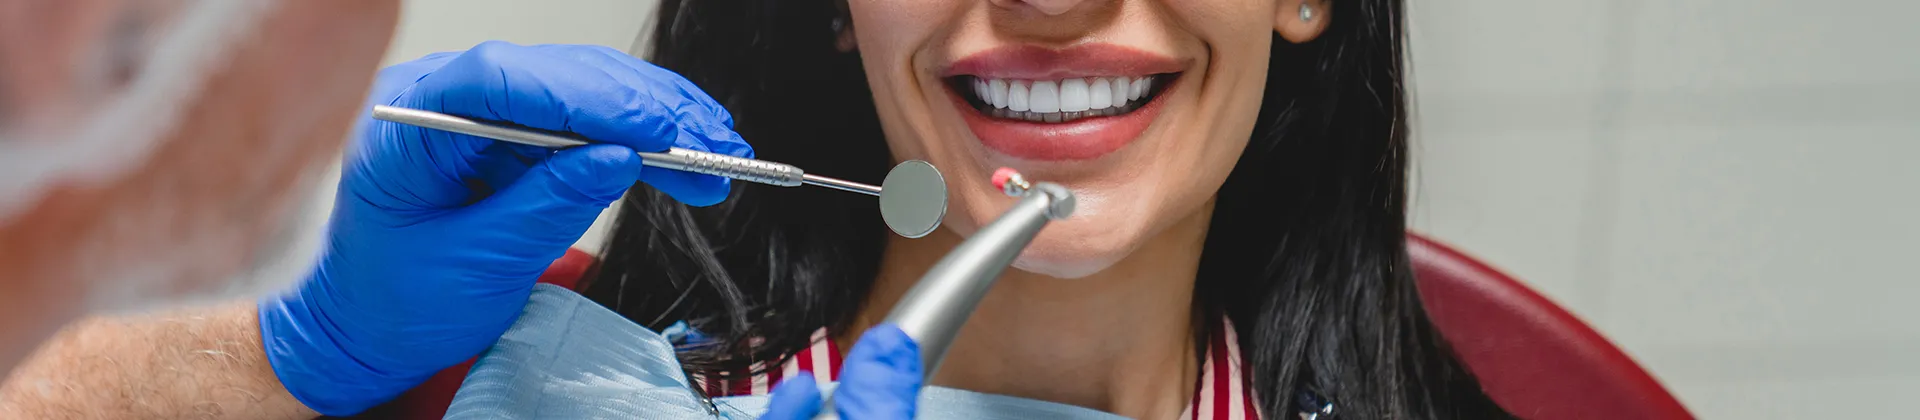 carillas dentales clinica dental barqueta